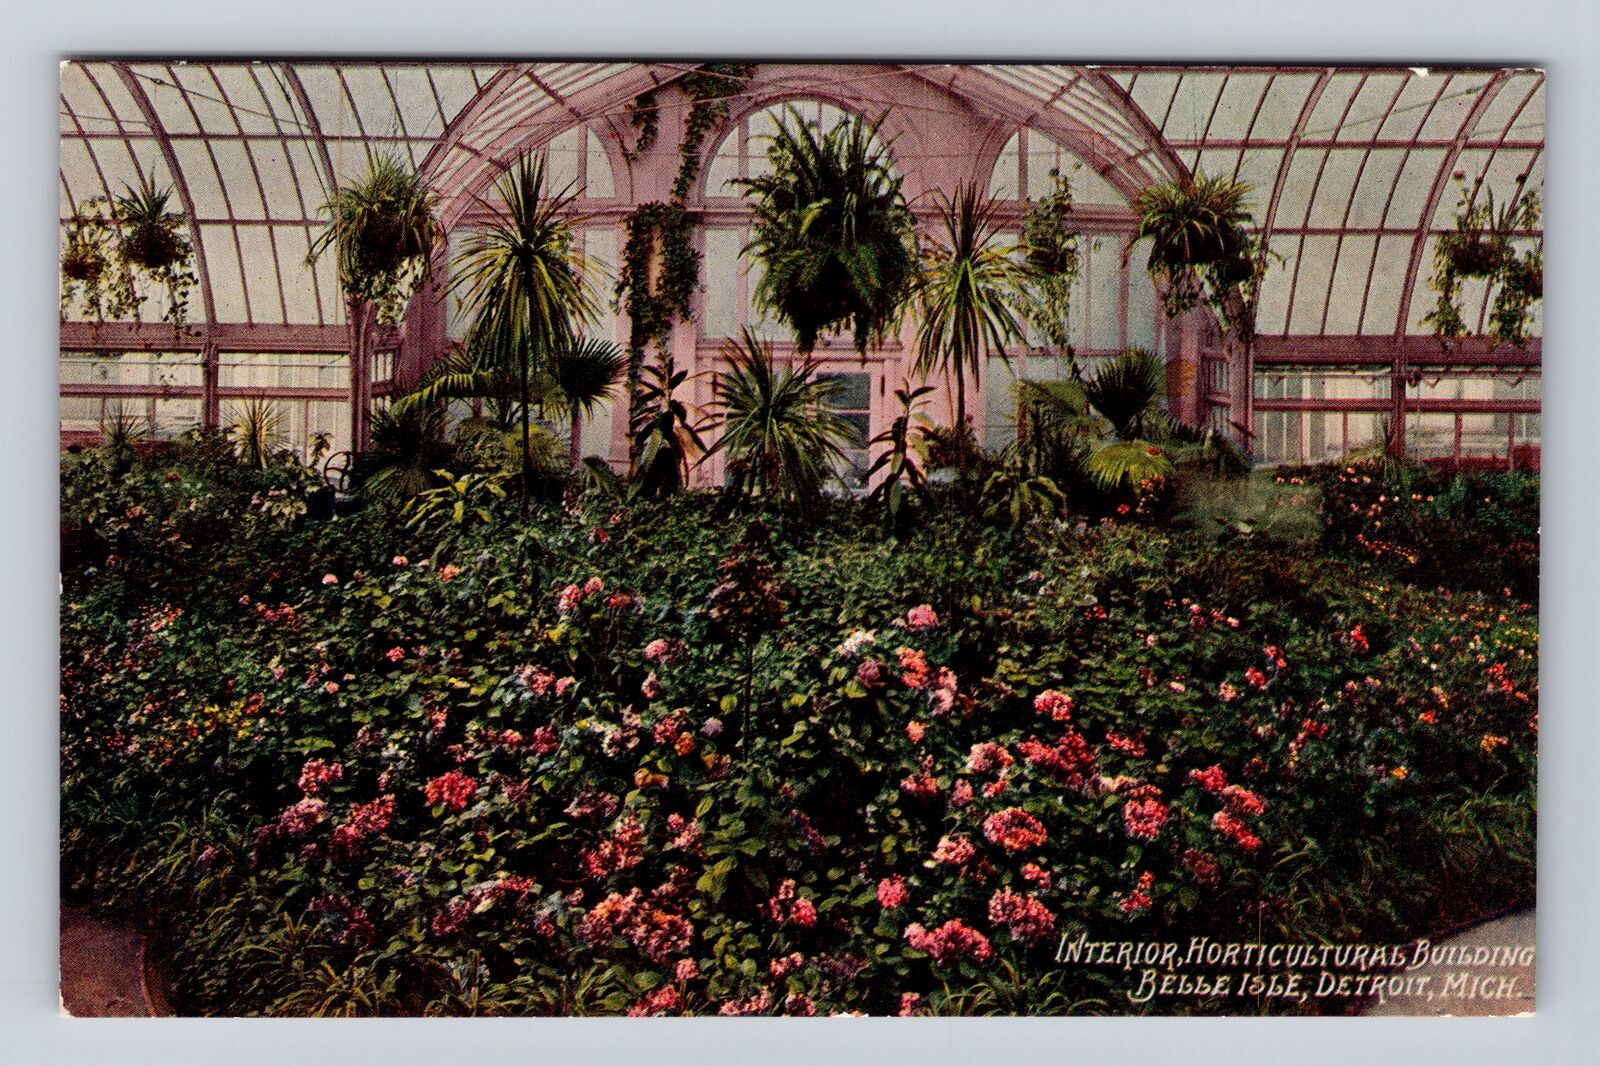 Detroit MI-Michigan, Belle Isle Horticultural Building, Vintage Postcard